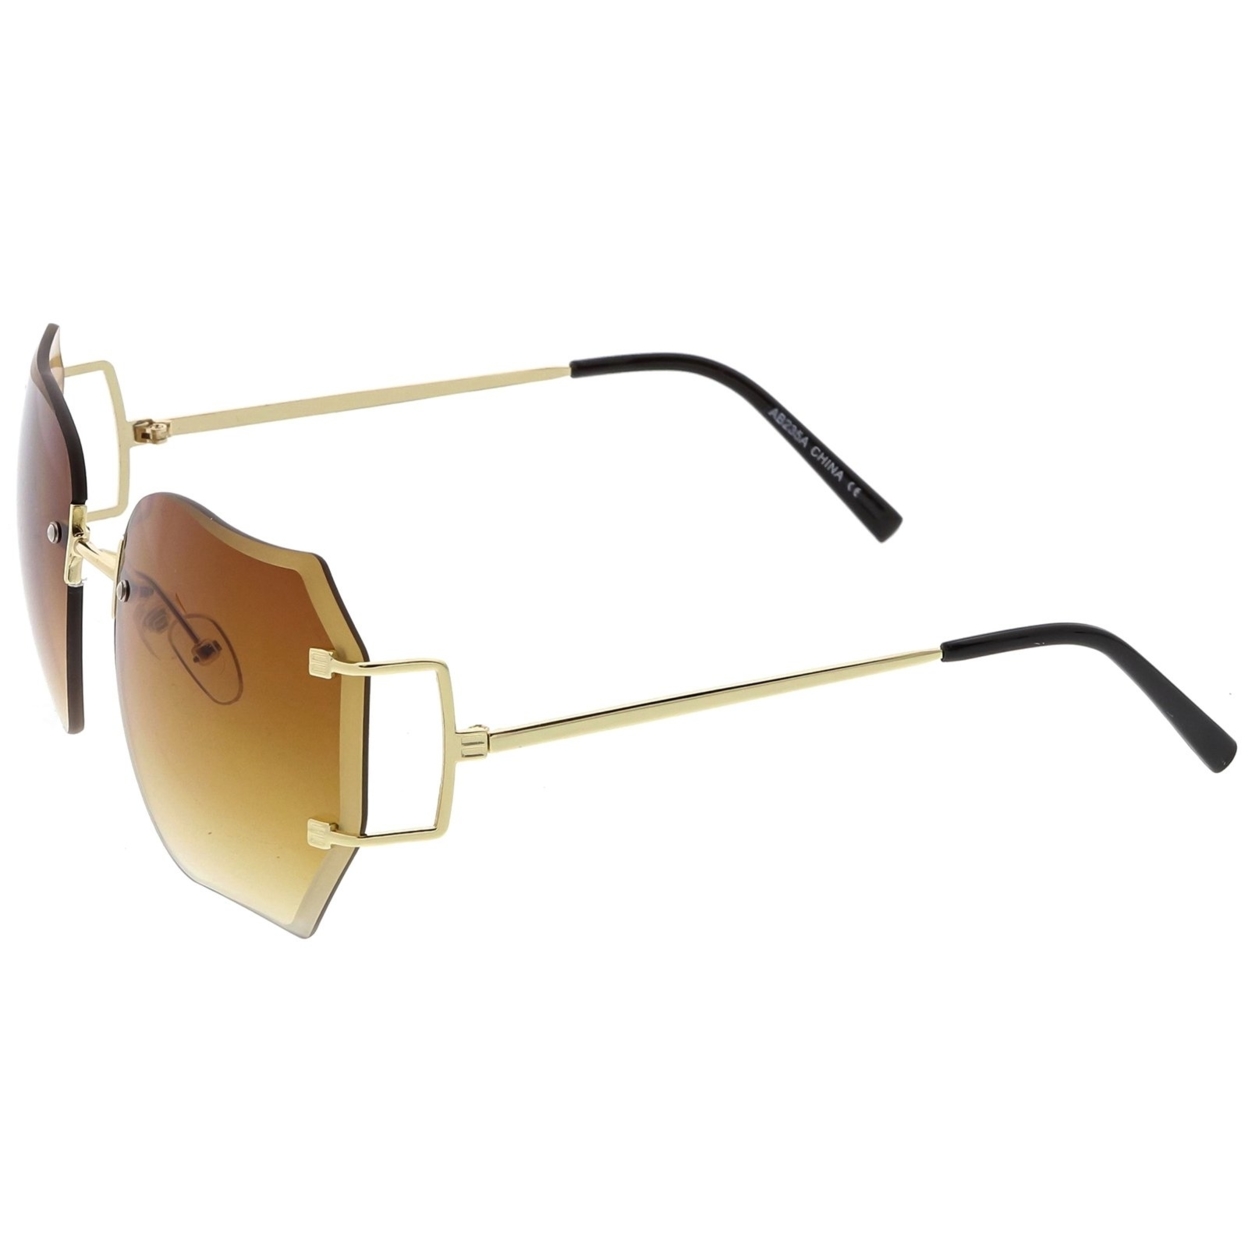 Oversize Rimless Square Sunglasses Slim Metal Arms Beveled Gradient Lens 61mm - Gold / Amber